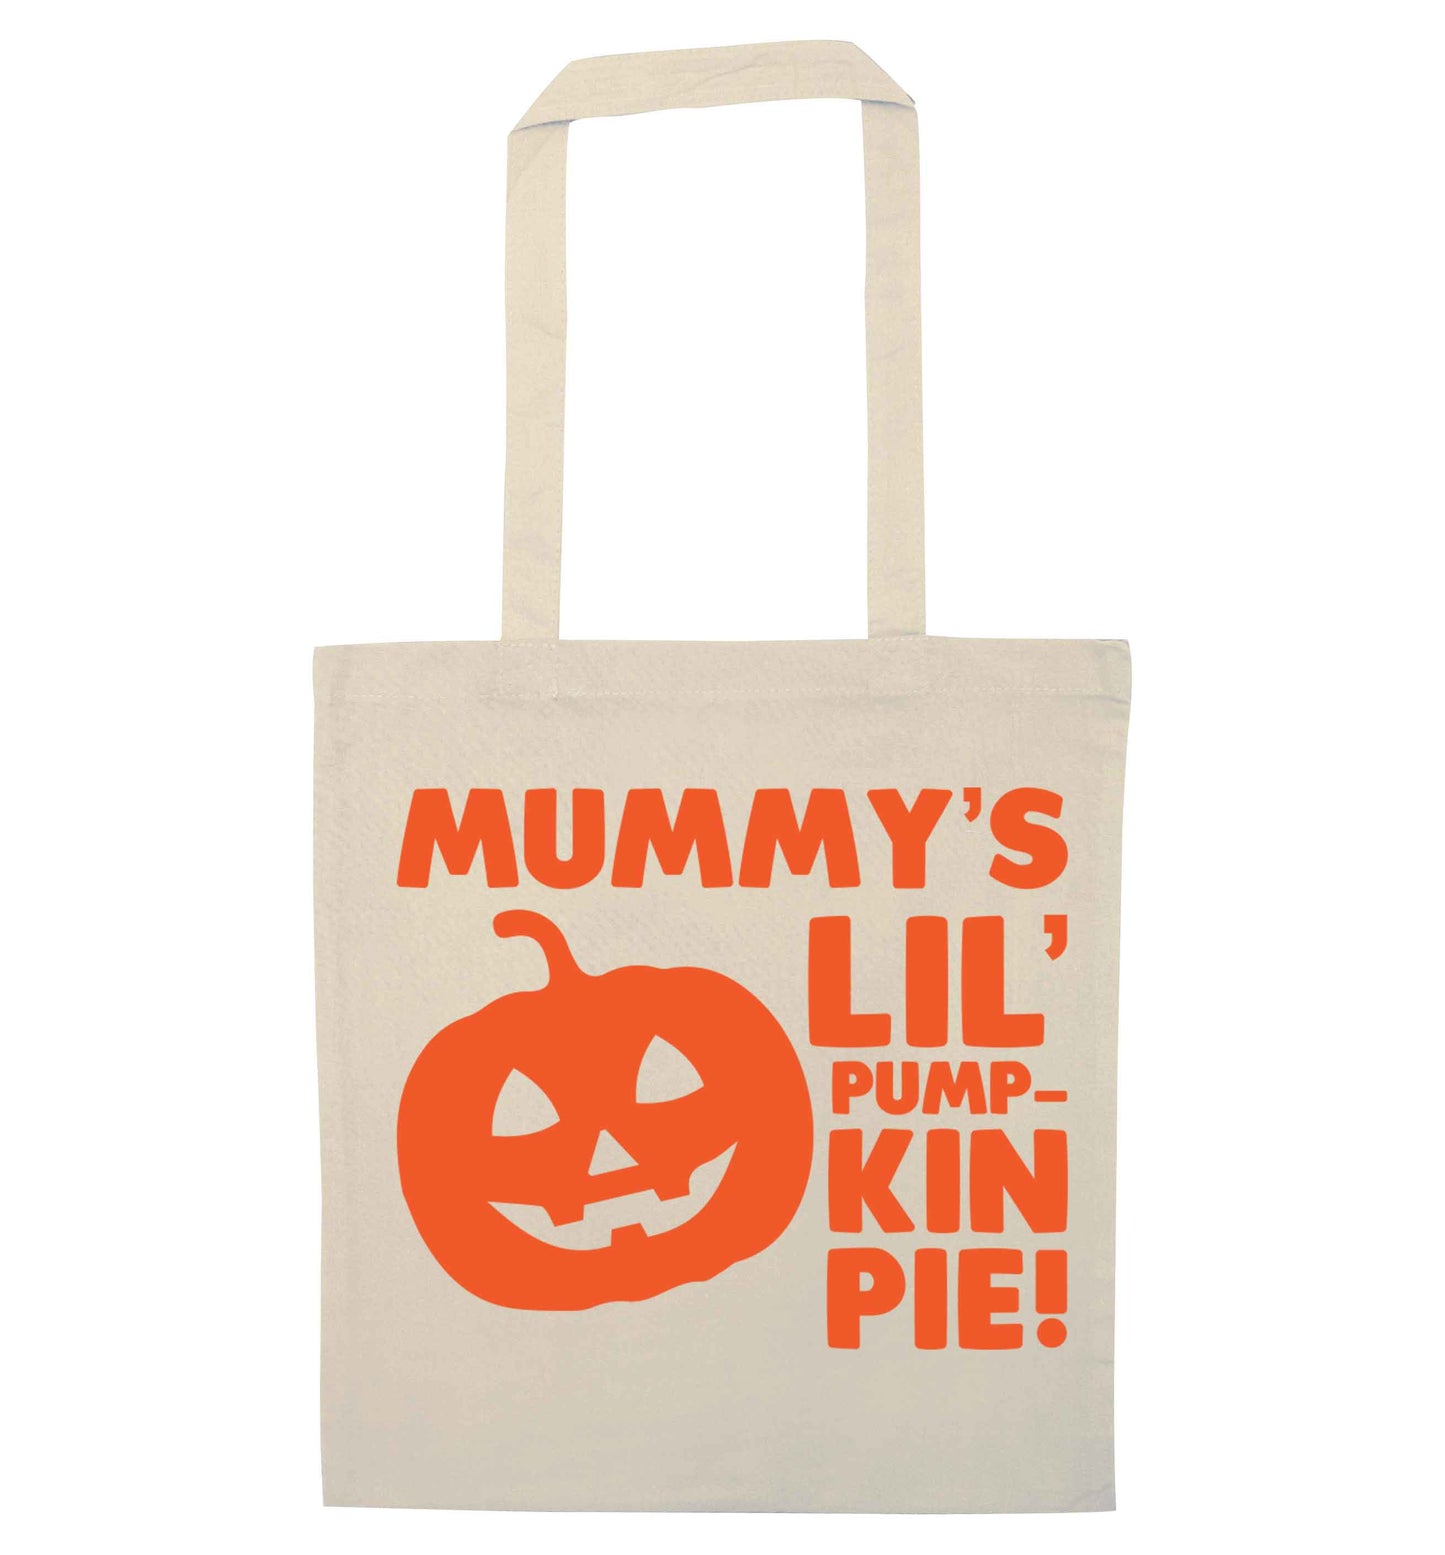 Mummy's lil' pumpkin pie natural tote bag